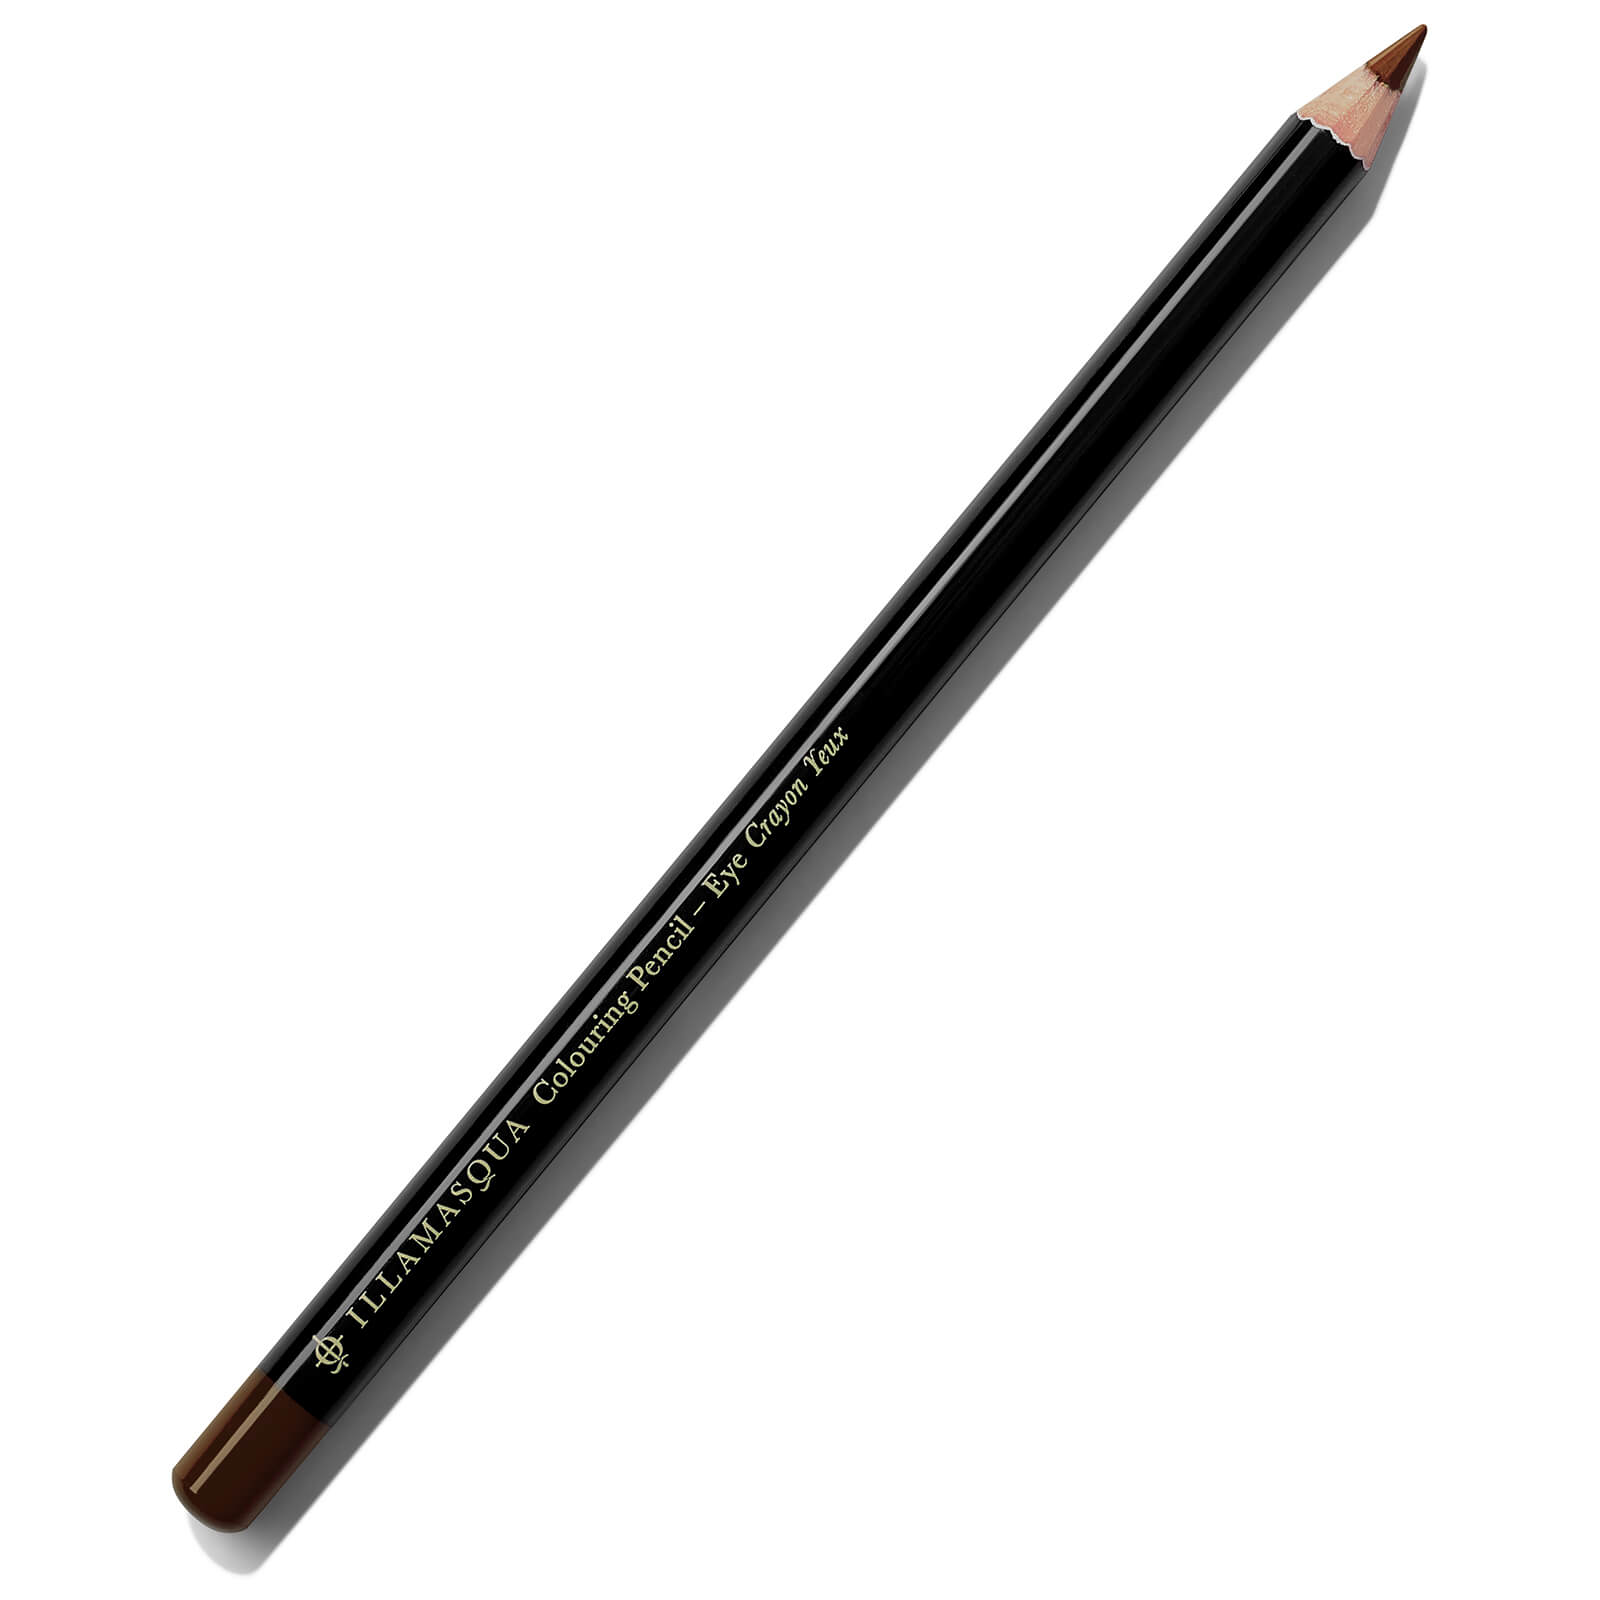 illamasqua colouring eye pencil 1.4g (various shades) - fidelity